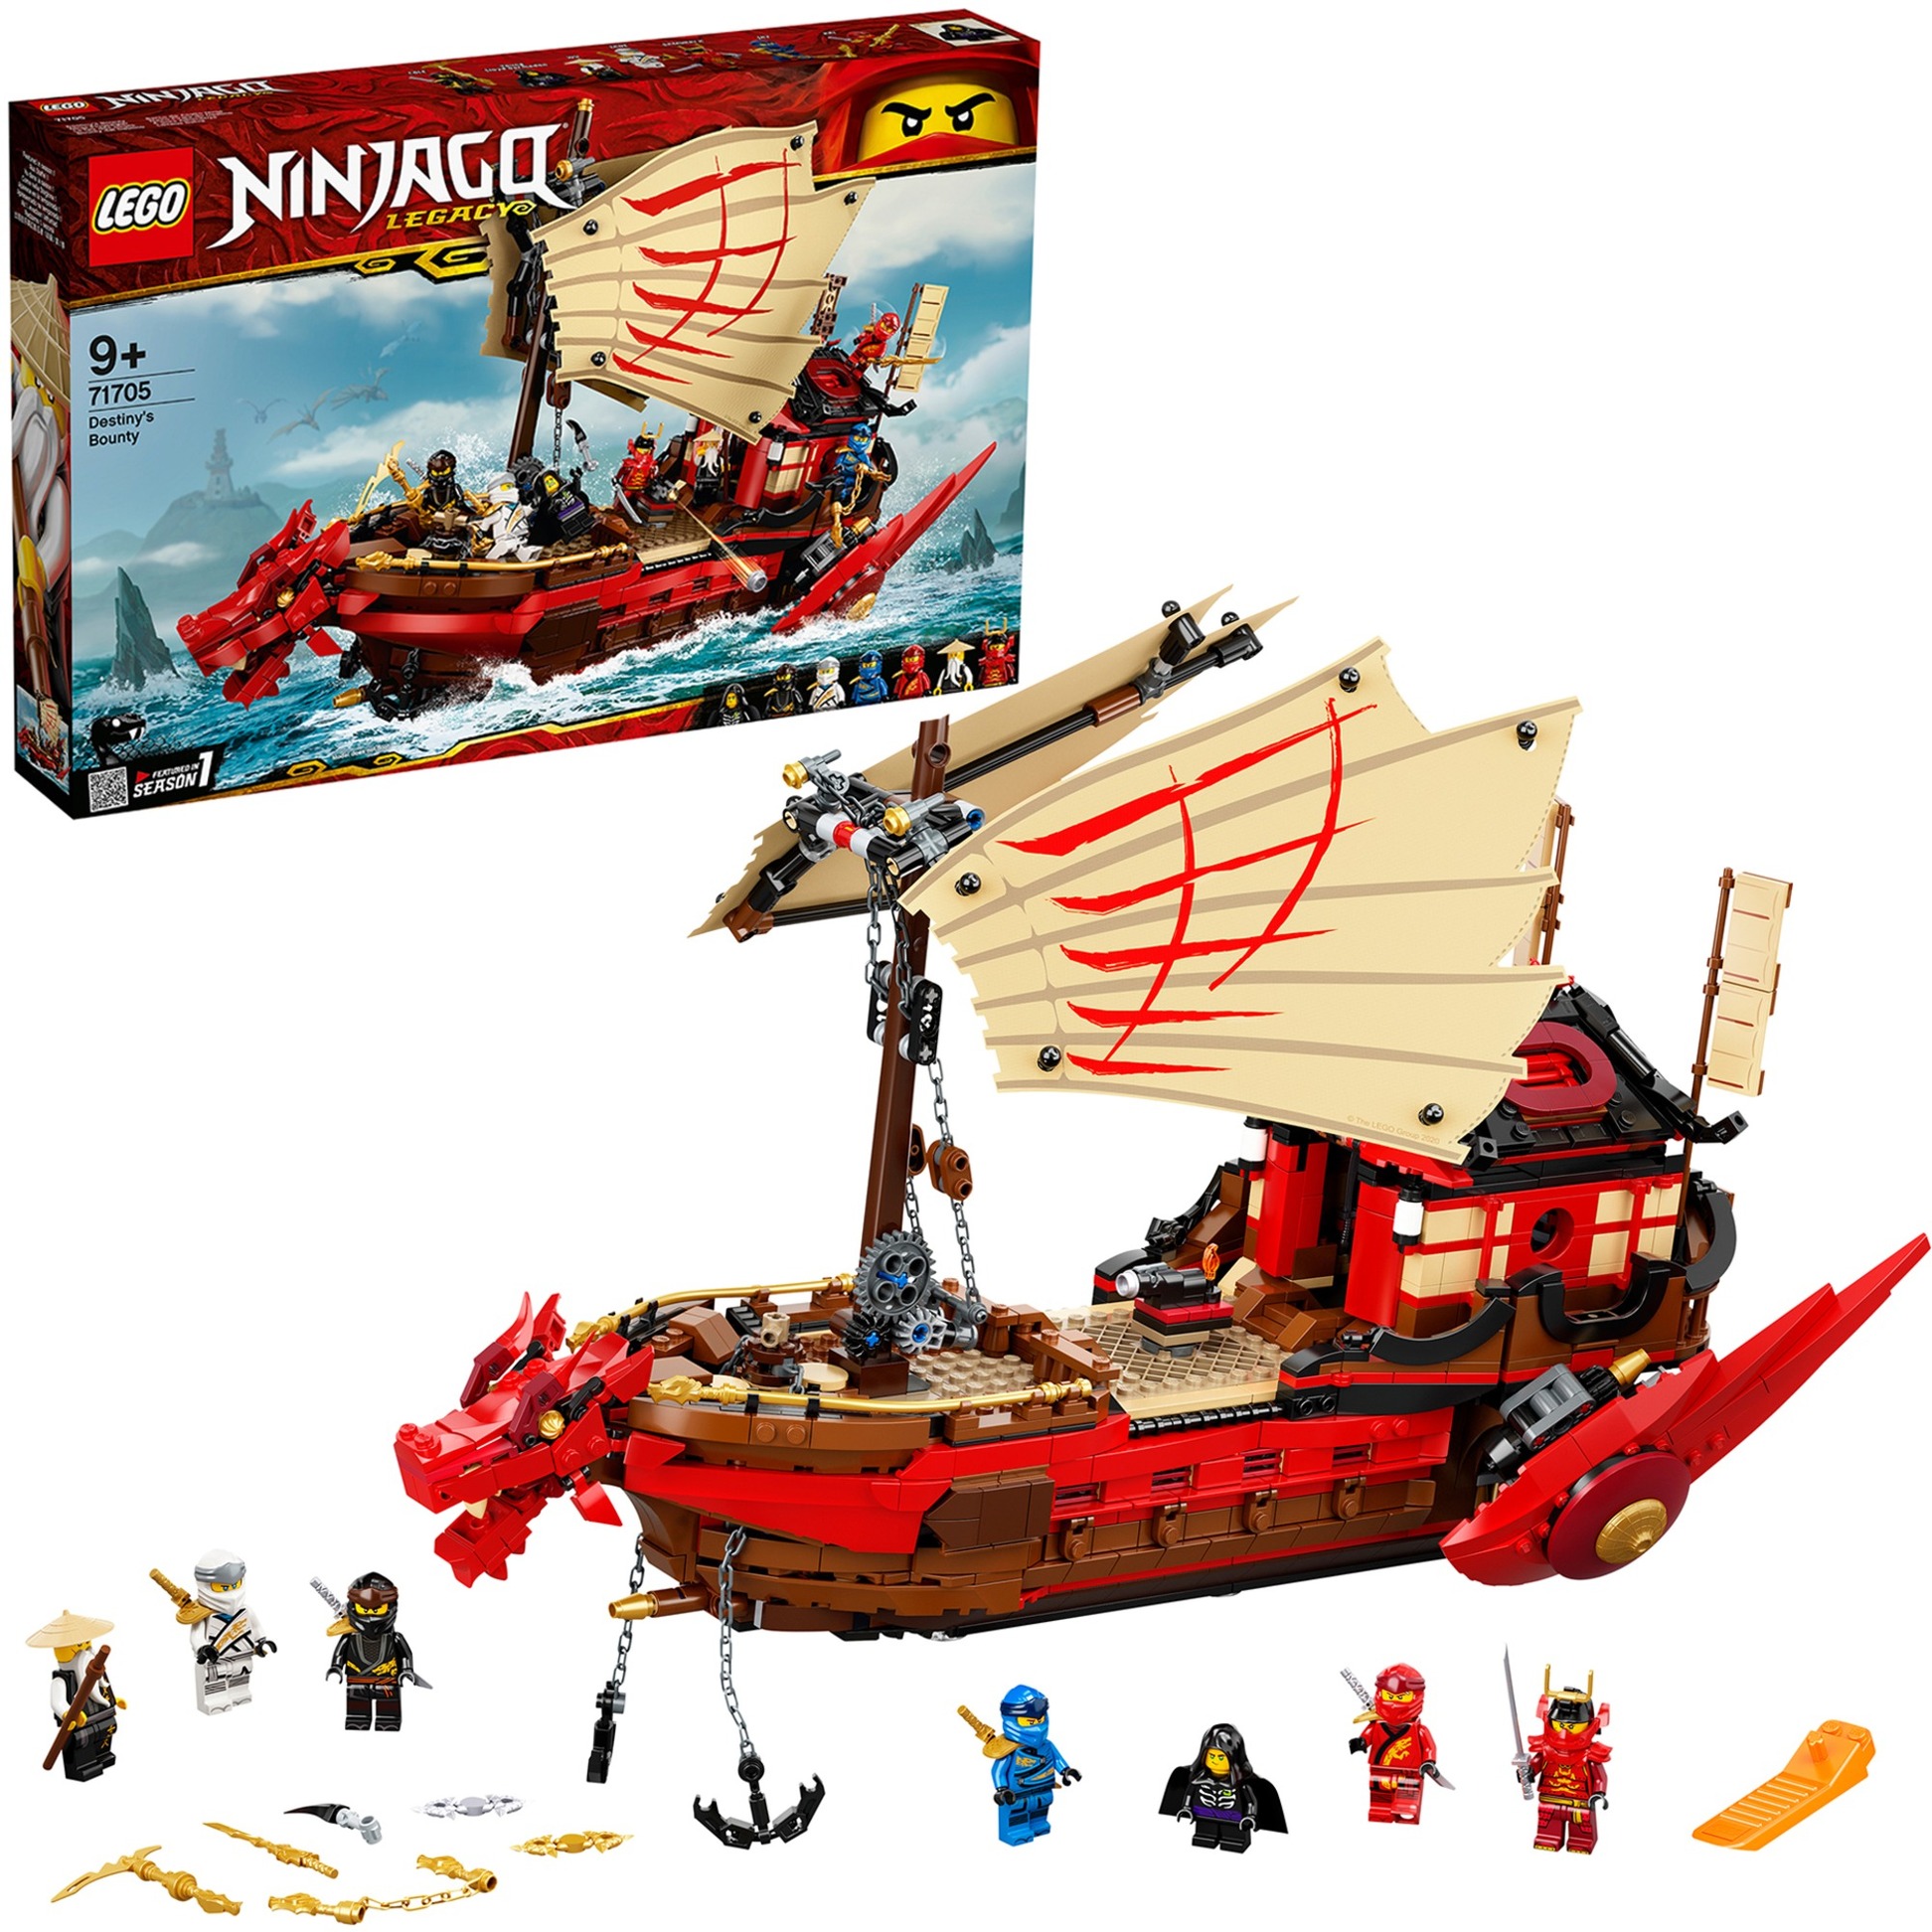 Spielzeug: Lego 71705 Ninjago Ninja-Flugsegler